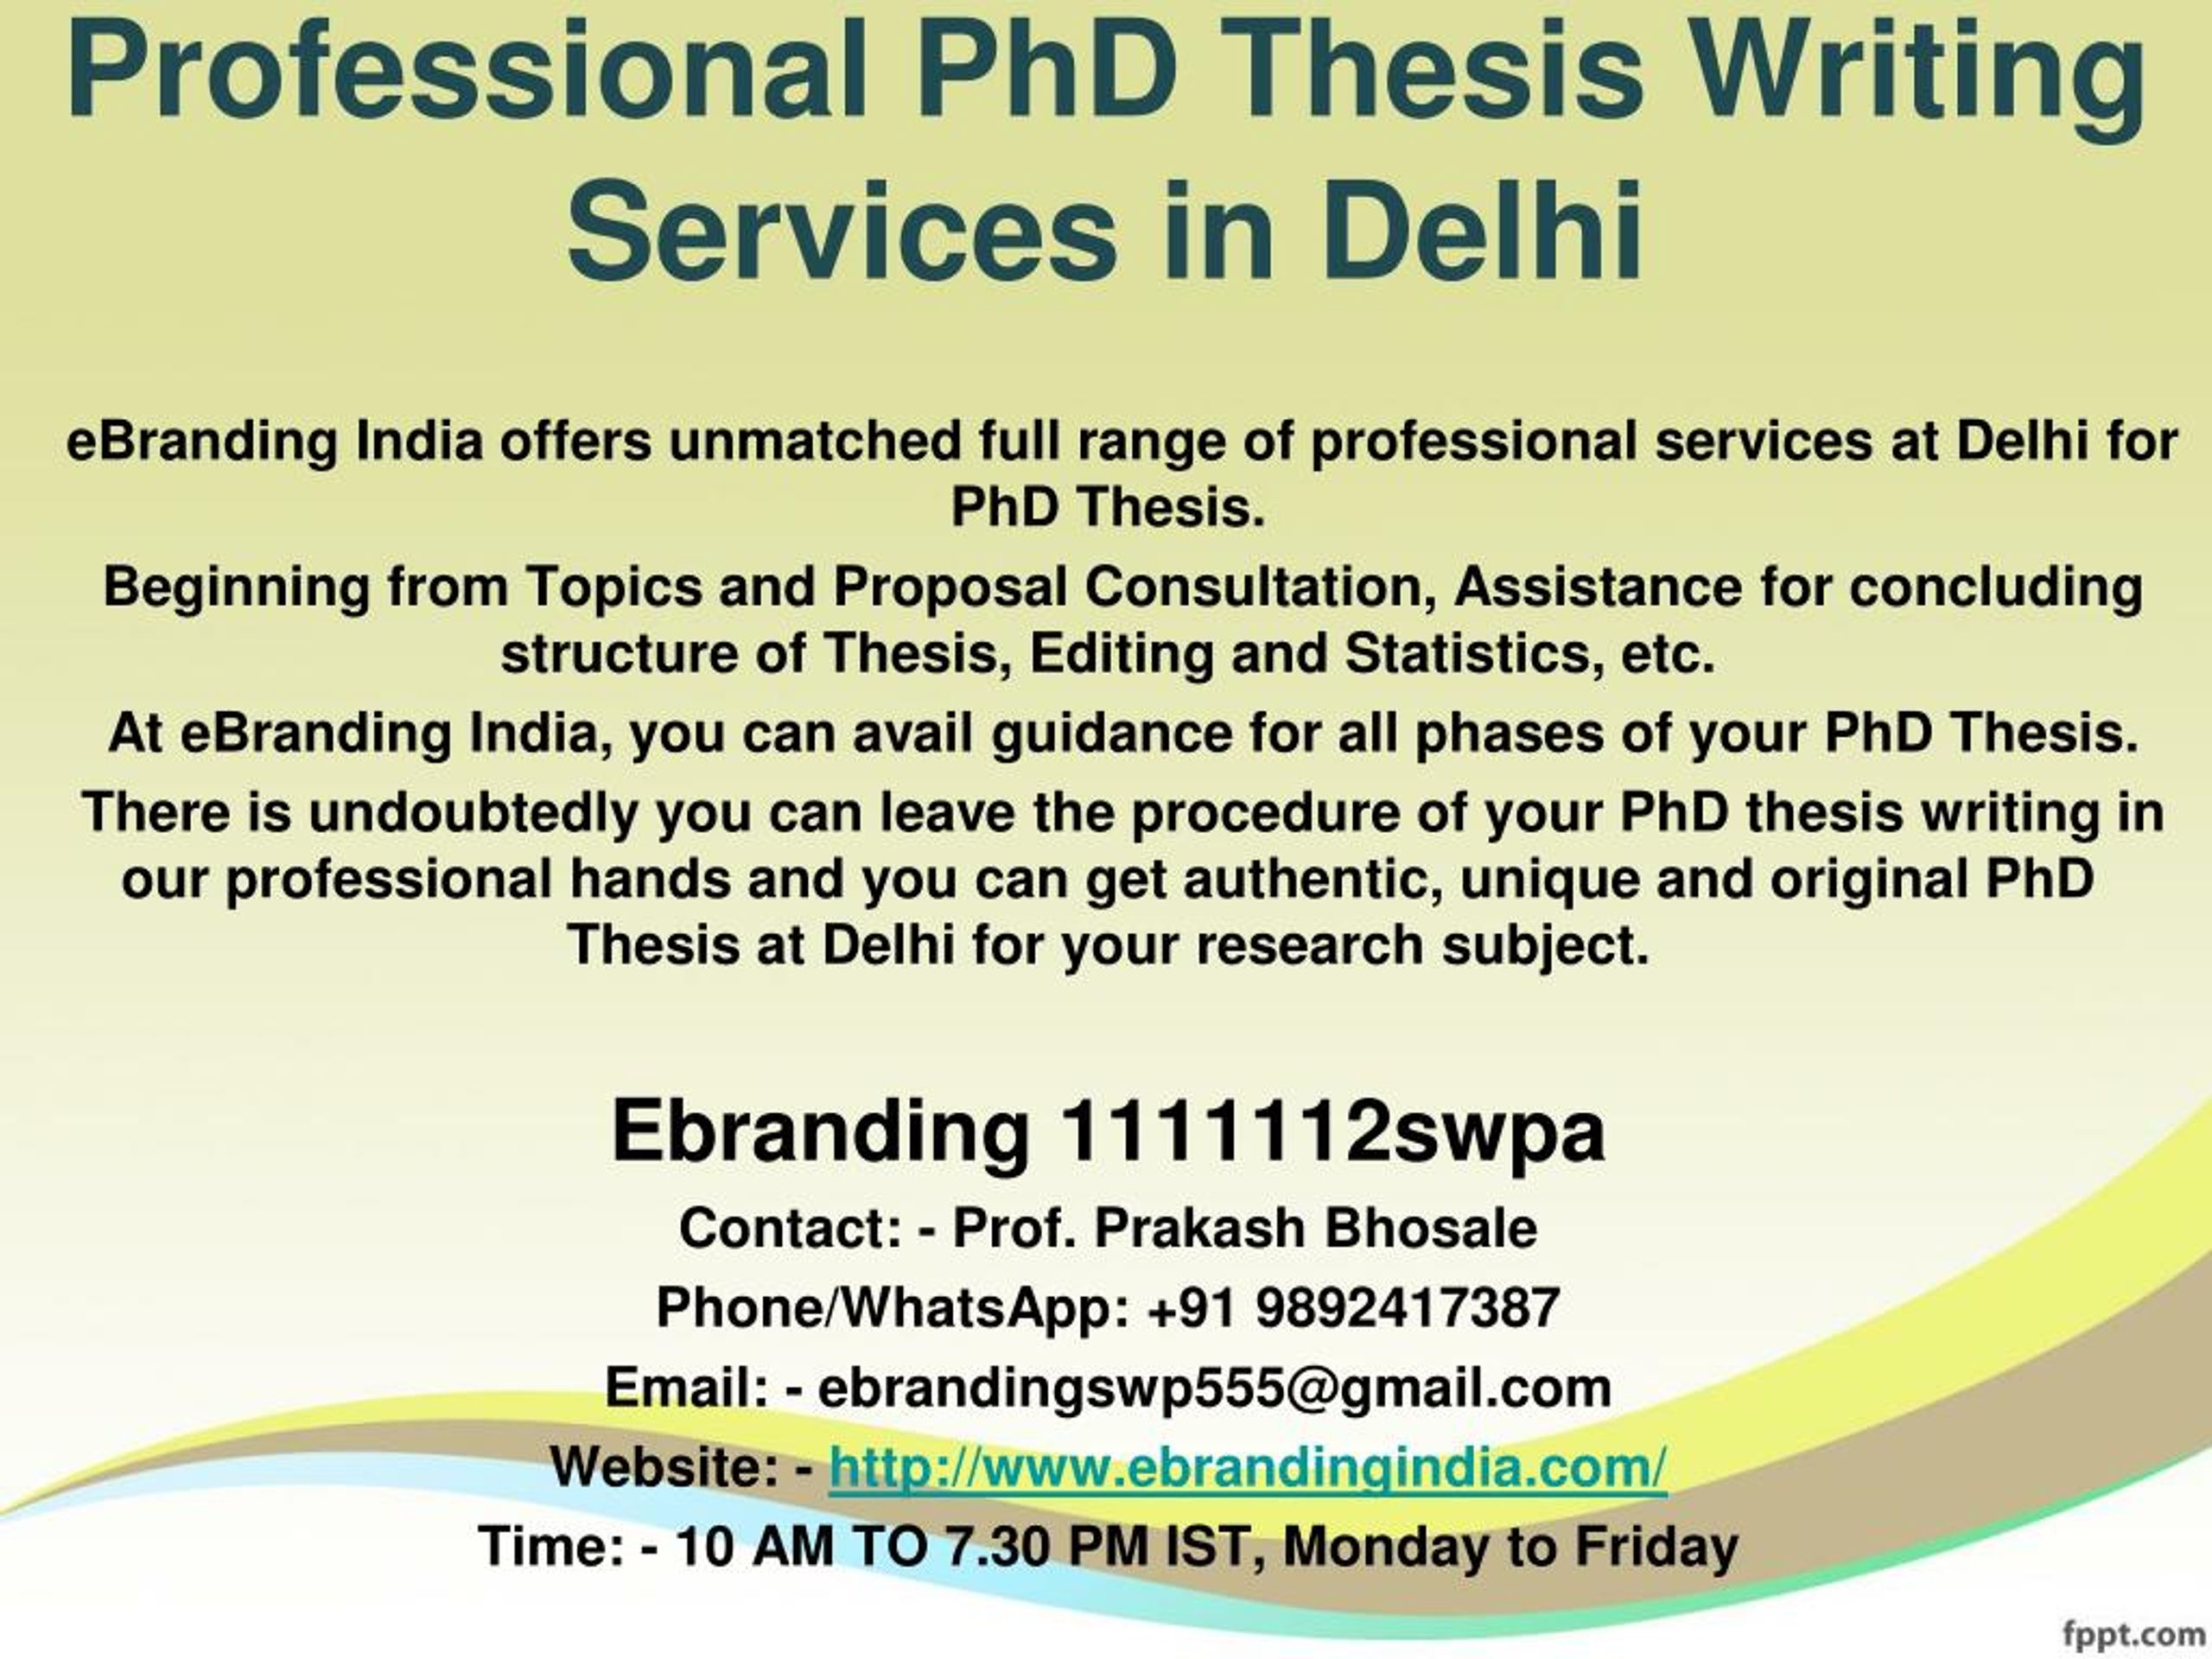 Dissertation editing help delhi